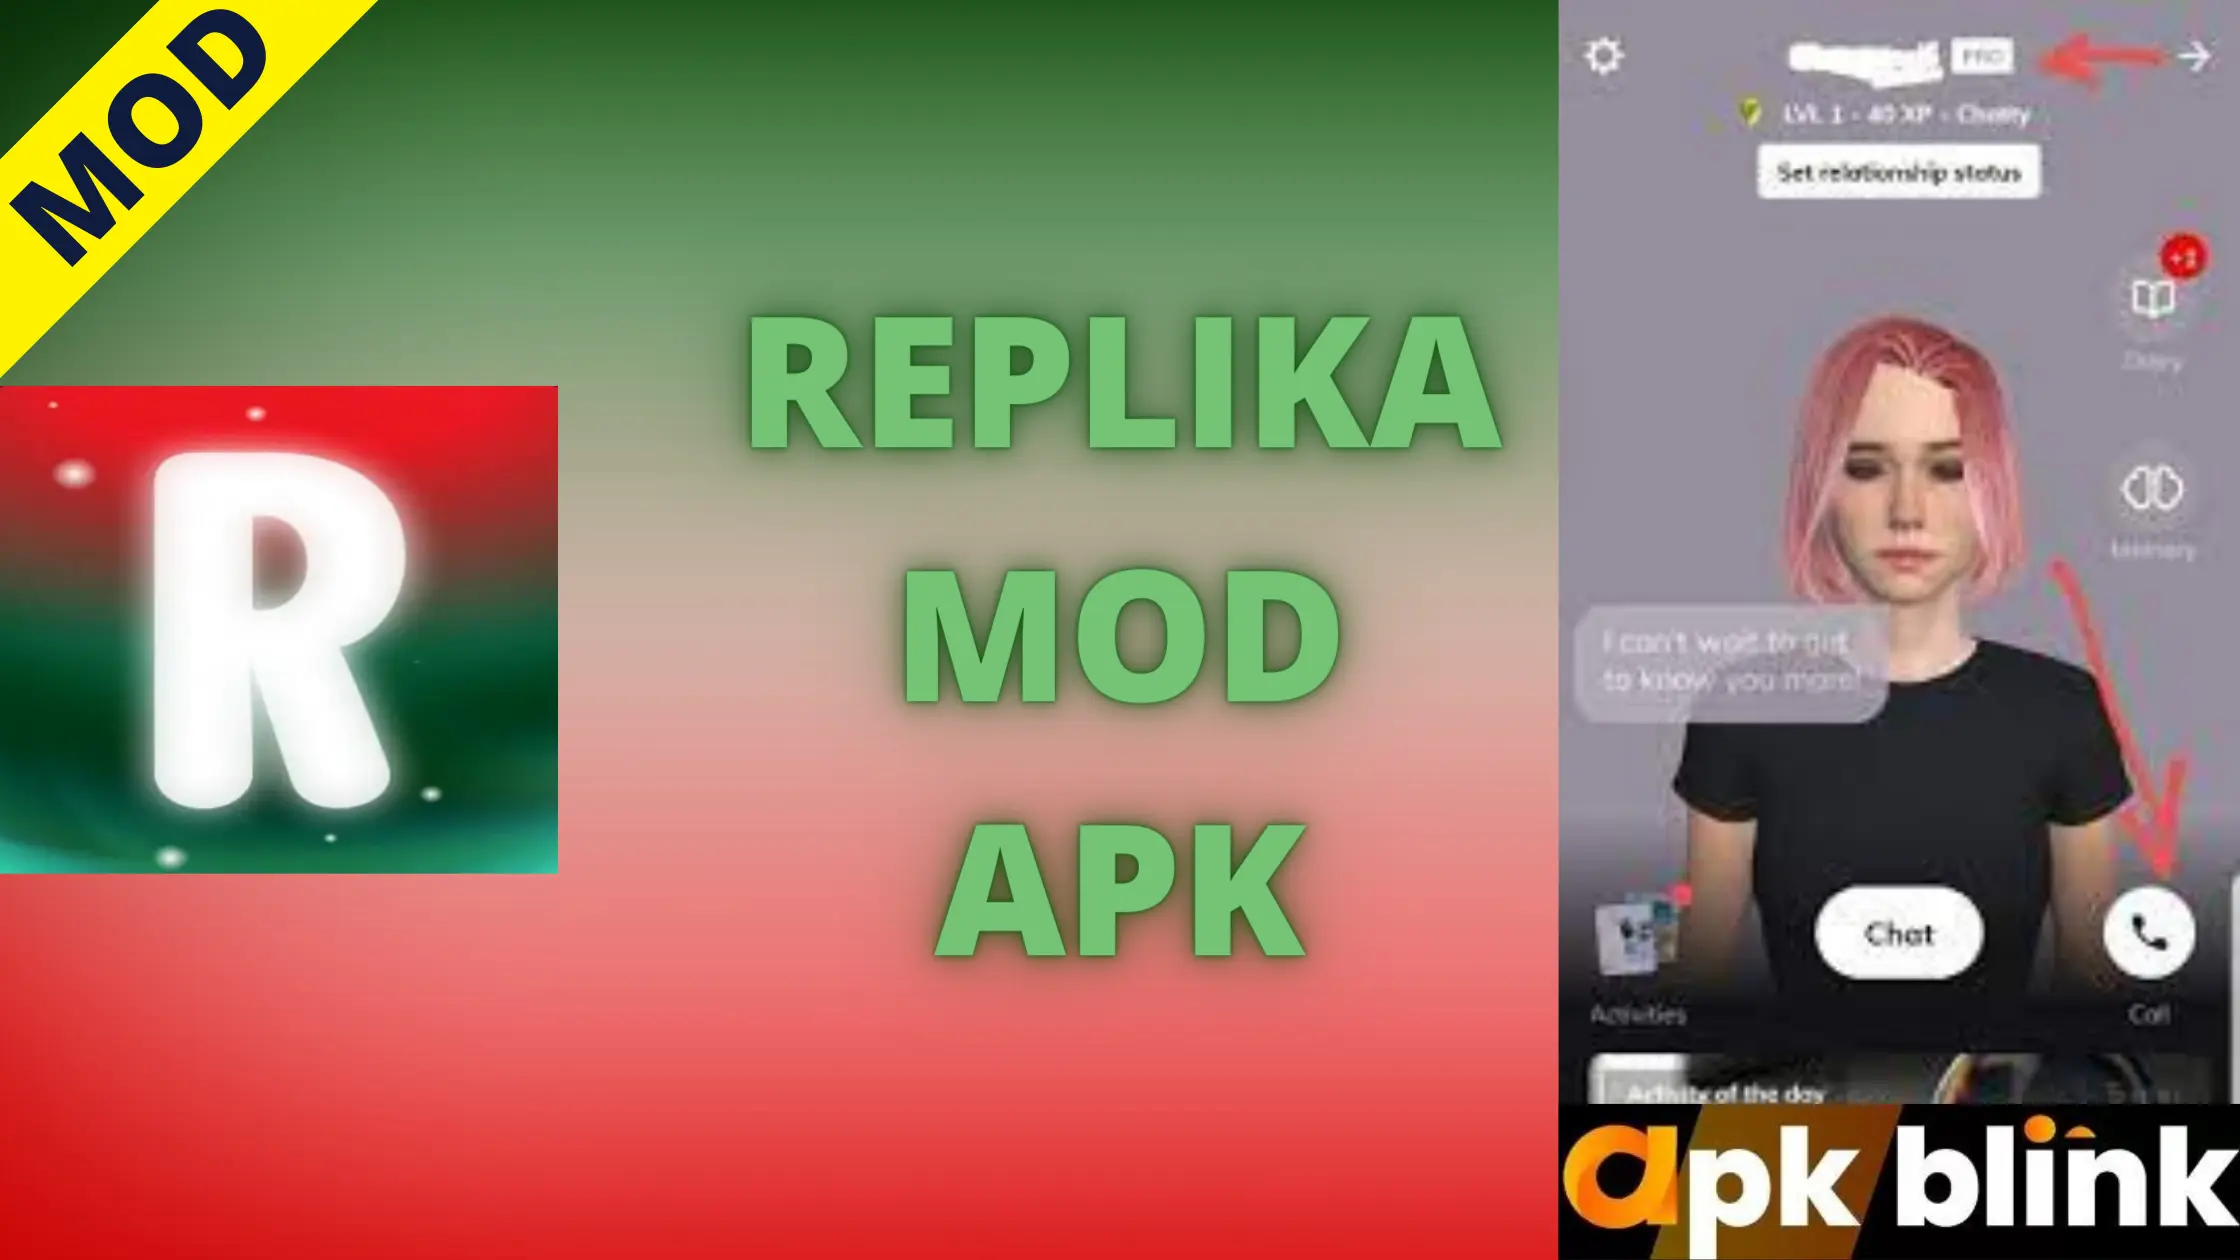 Replika Mod APK